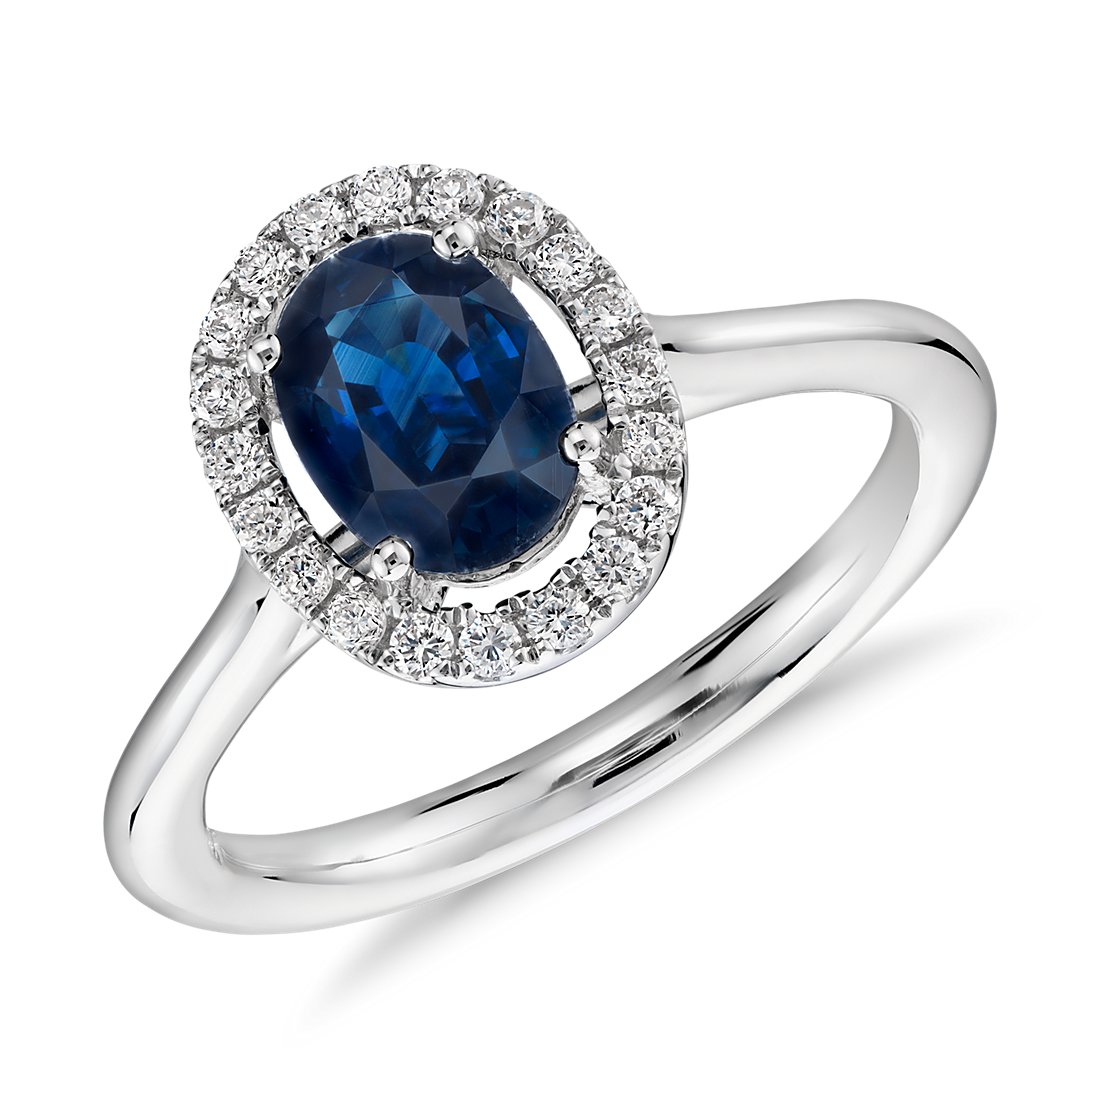 BLUE NILE VS JAMES ALLEN: Best Online Engagement Rings & Diamond Store,  Reputable Retailer Jewelers - YouTube